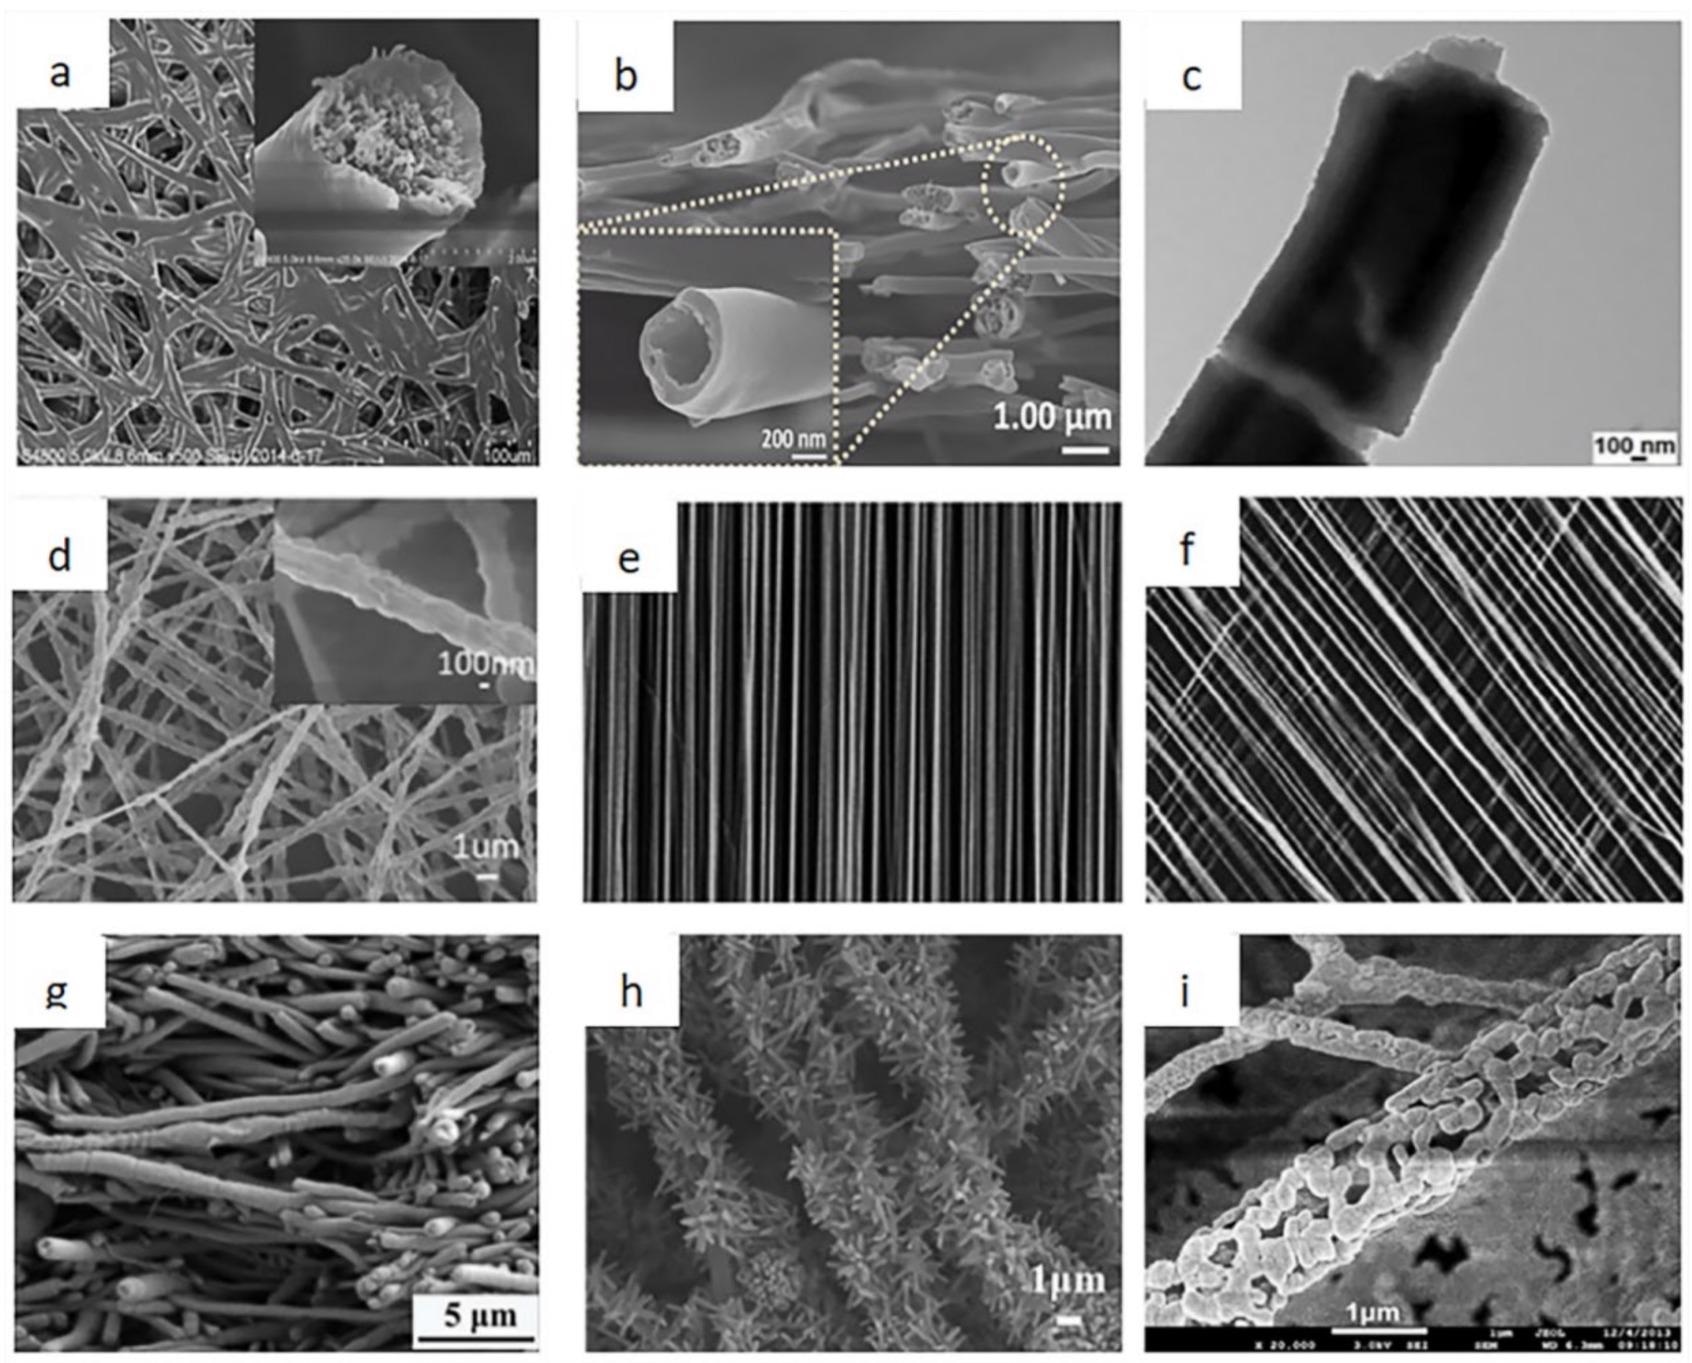 The different morphologies of the electrospun nanofibers. (a) Cobweb nanofiber; (b) hollow nanofiber; (c) core-shell nanofibers; (d) randomly distributed nanofibers; (e) aligned nanofibers; (f) patterned nanofibers; (g) composite nanofiber; (h) pine needle nanofibers; (i) hollowed-out nanofibers.